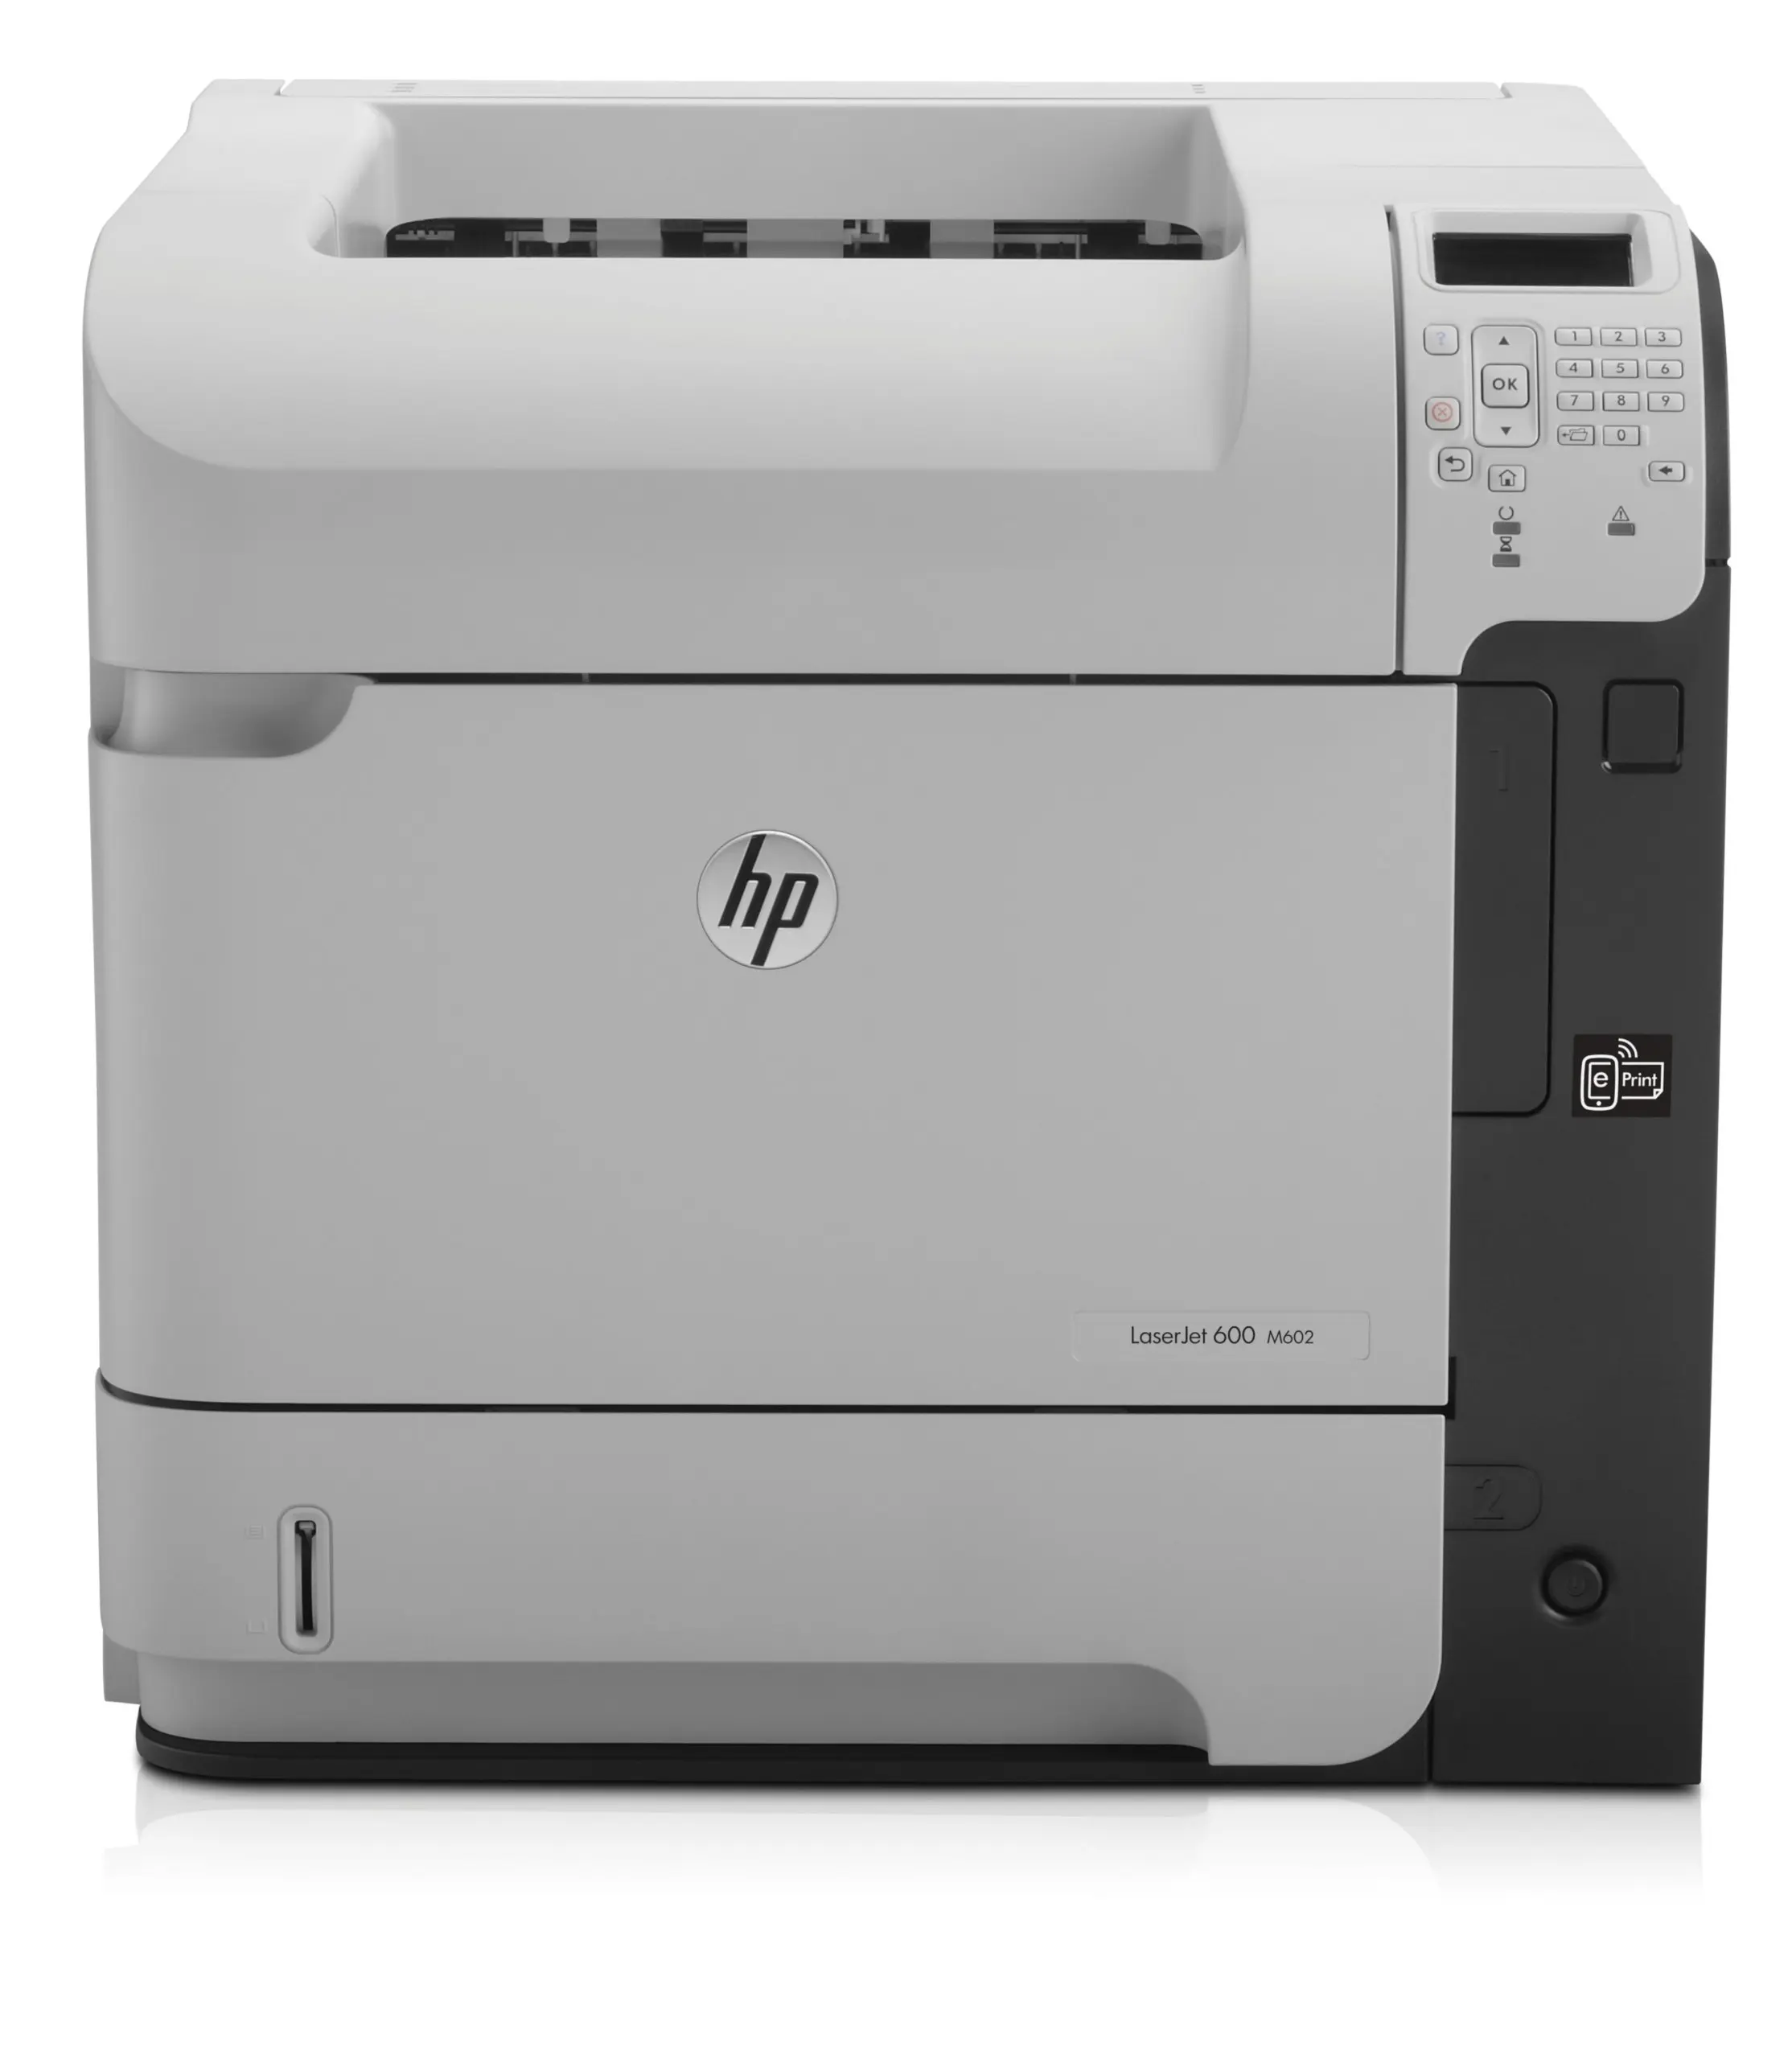 hewlett-packard m602n - Is the HP m602 discontinued